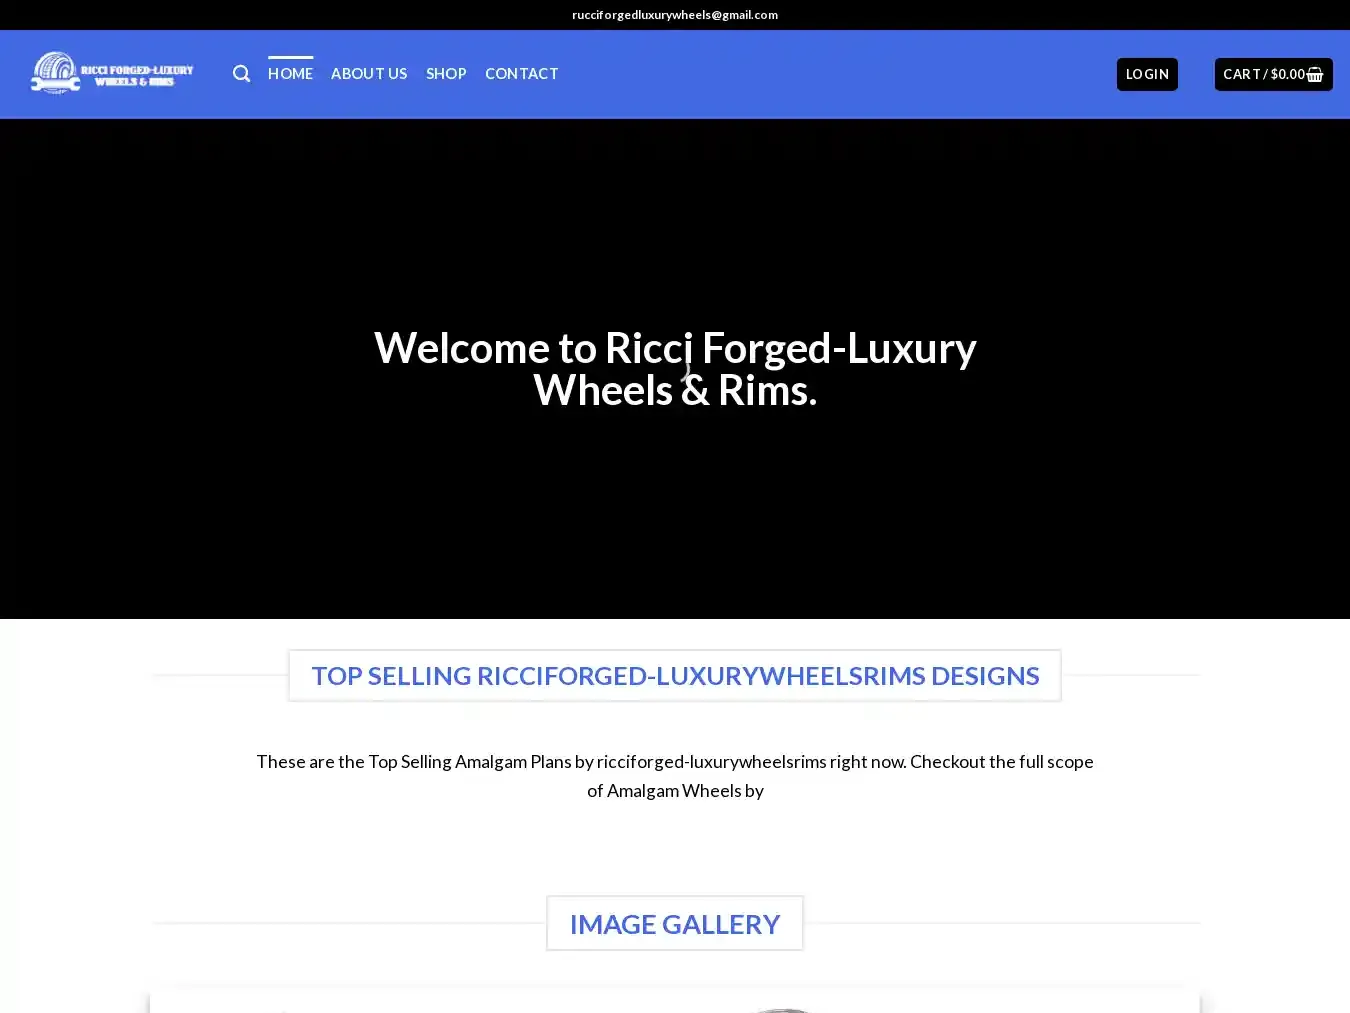 Ricciforged-luxurywheelsrims.com Fraudulent Automobile website.